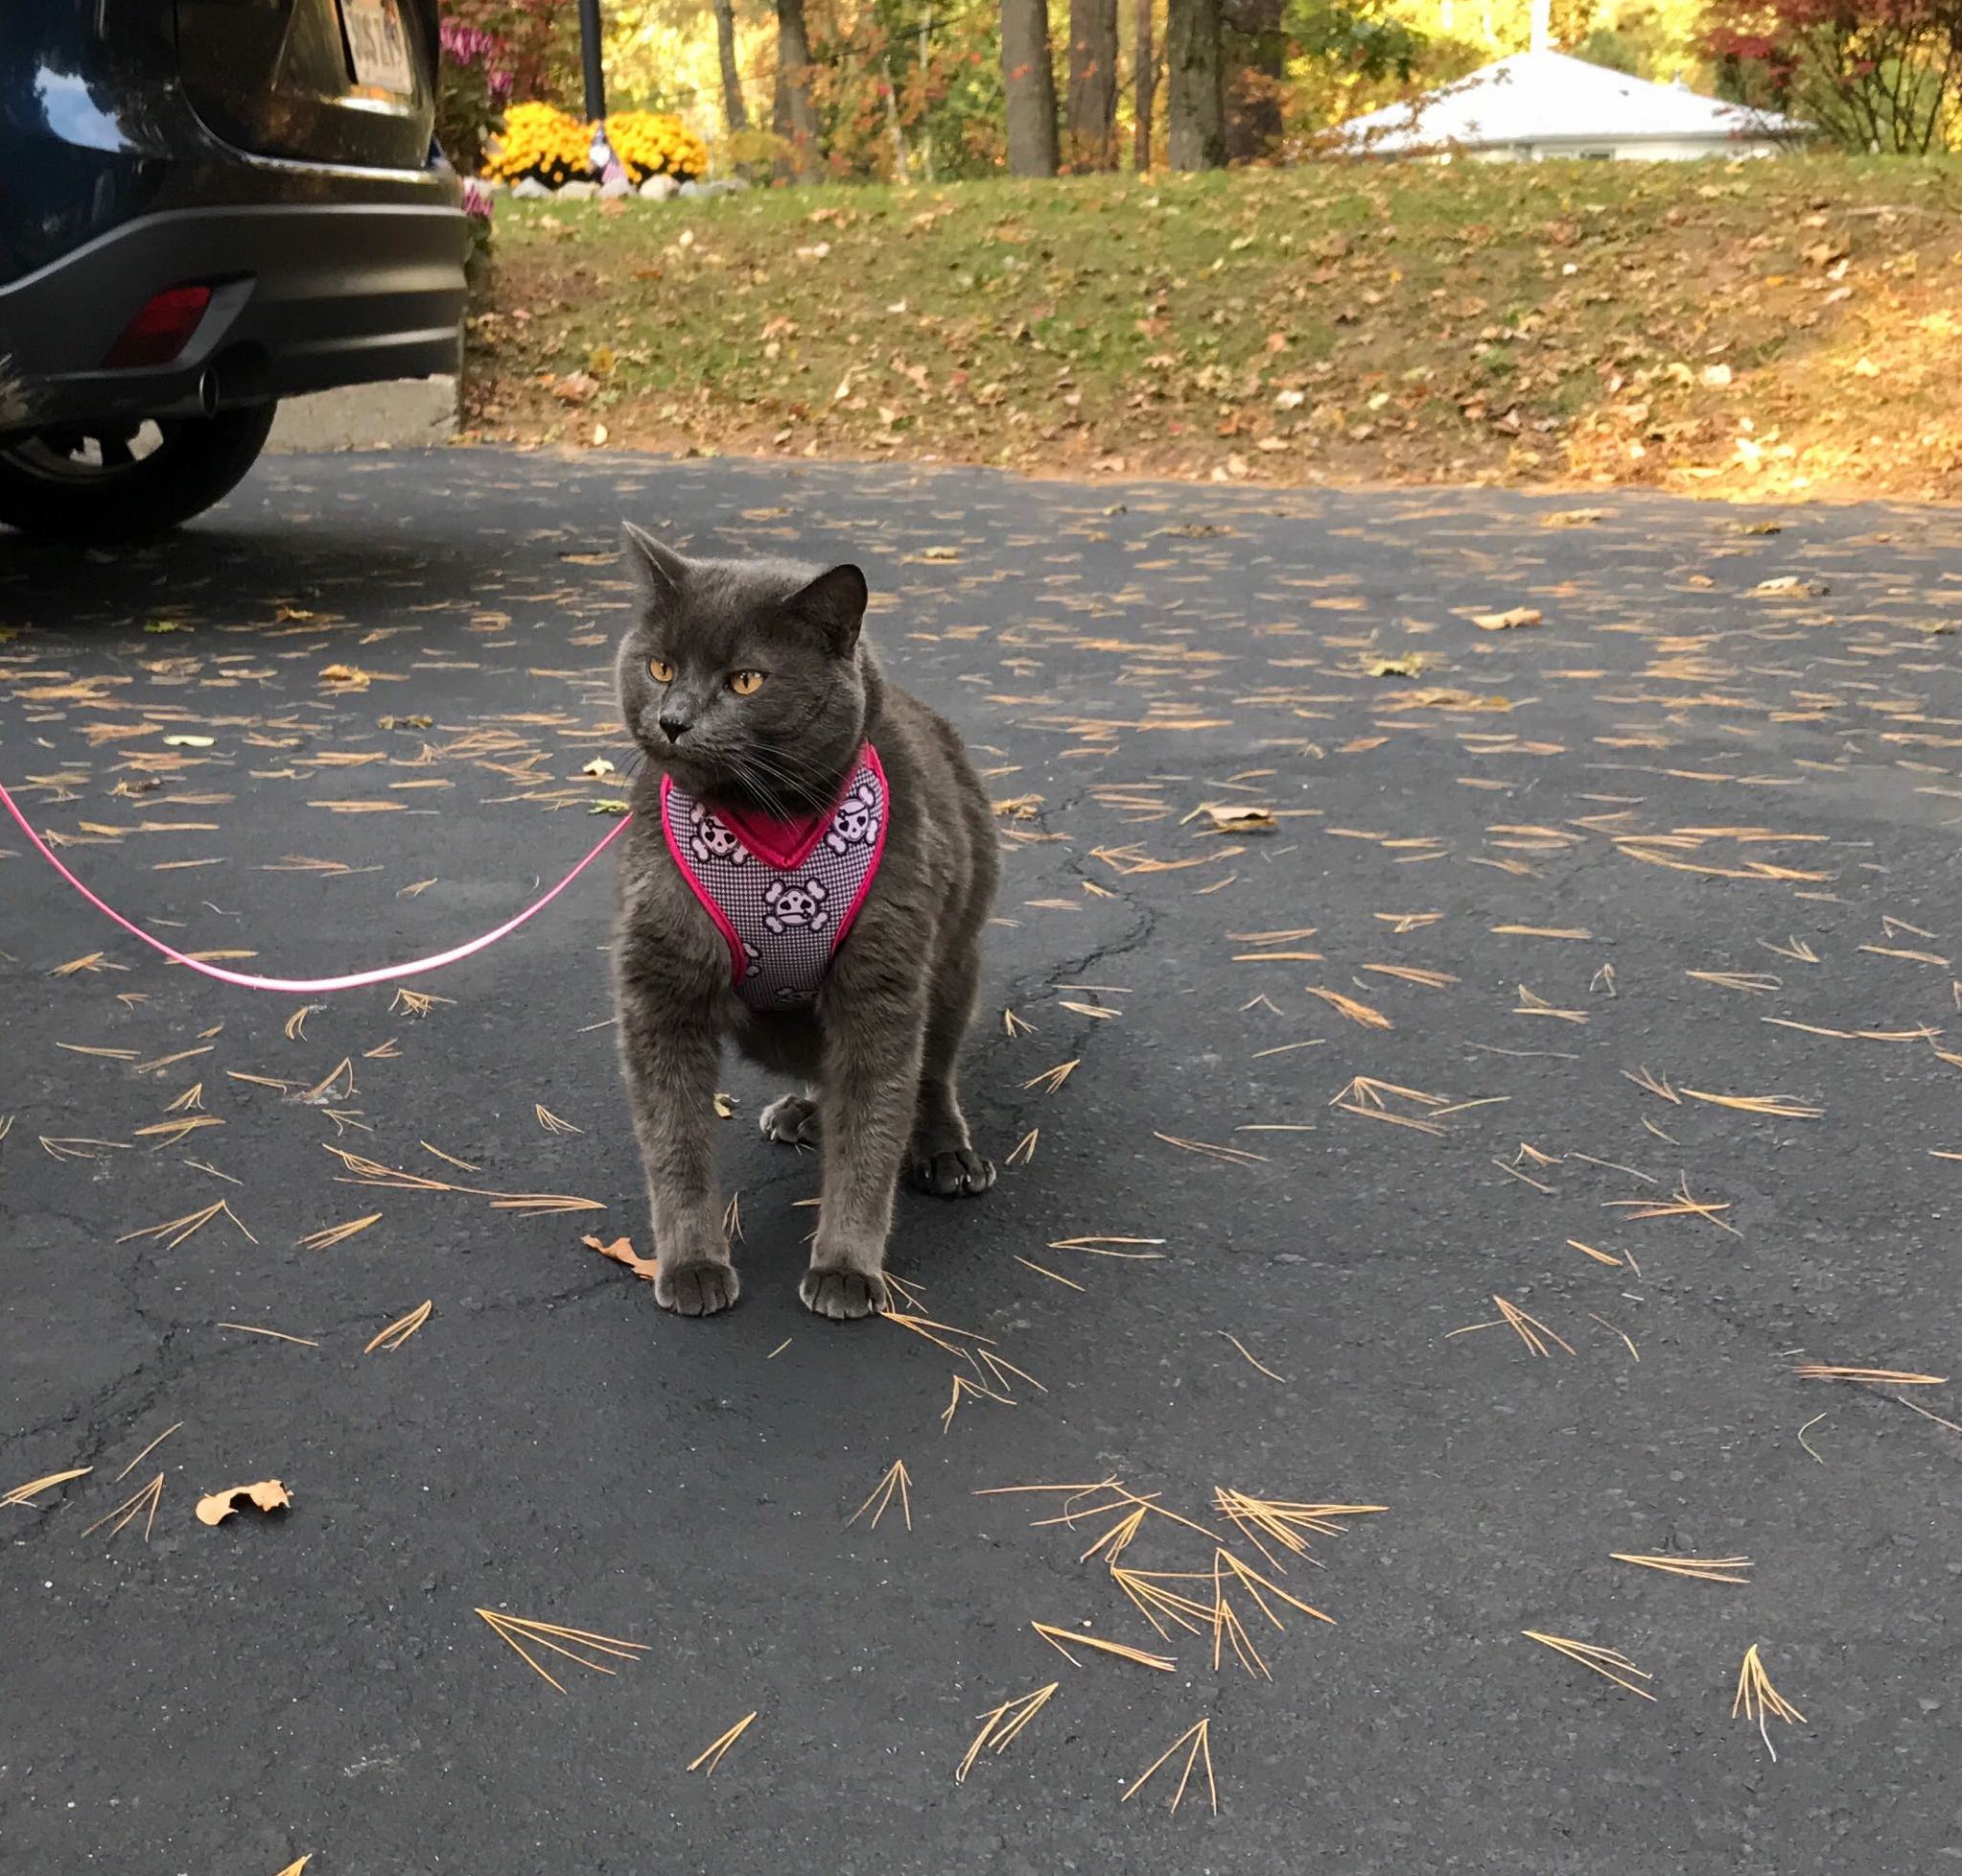 Morgan goes for a walk